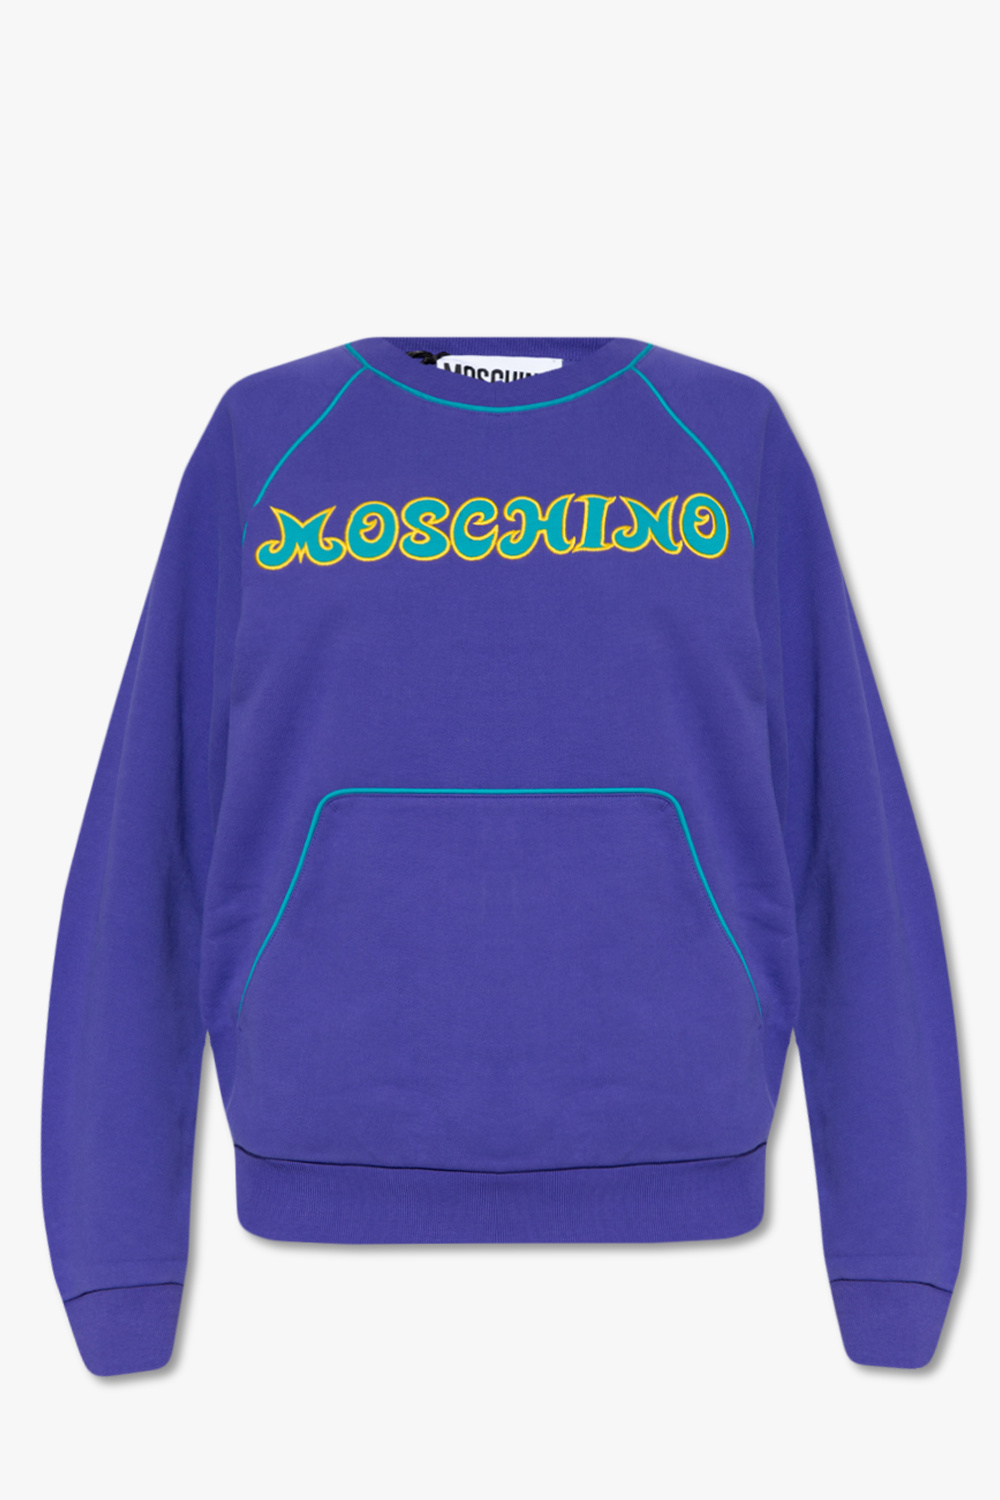 Moschino adidas Originals TRF Linear Crew HM2665 sweatshirt